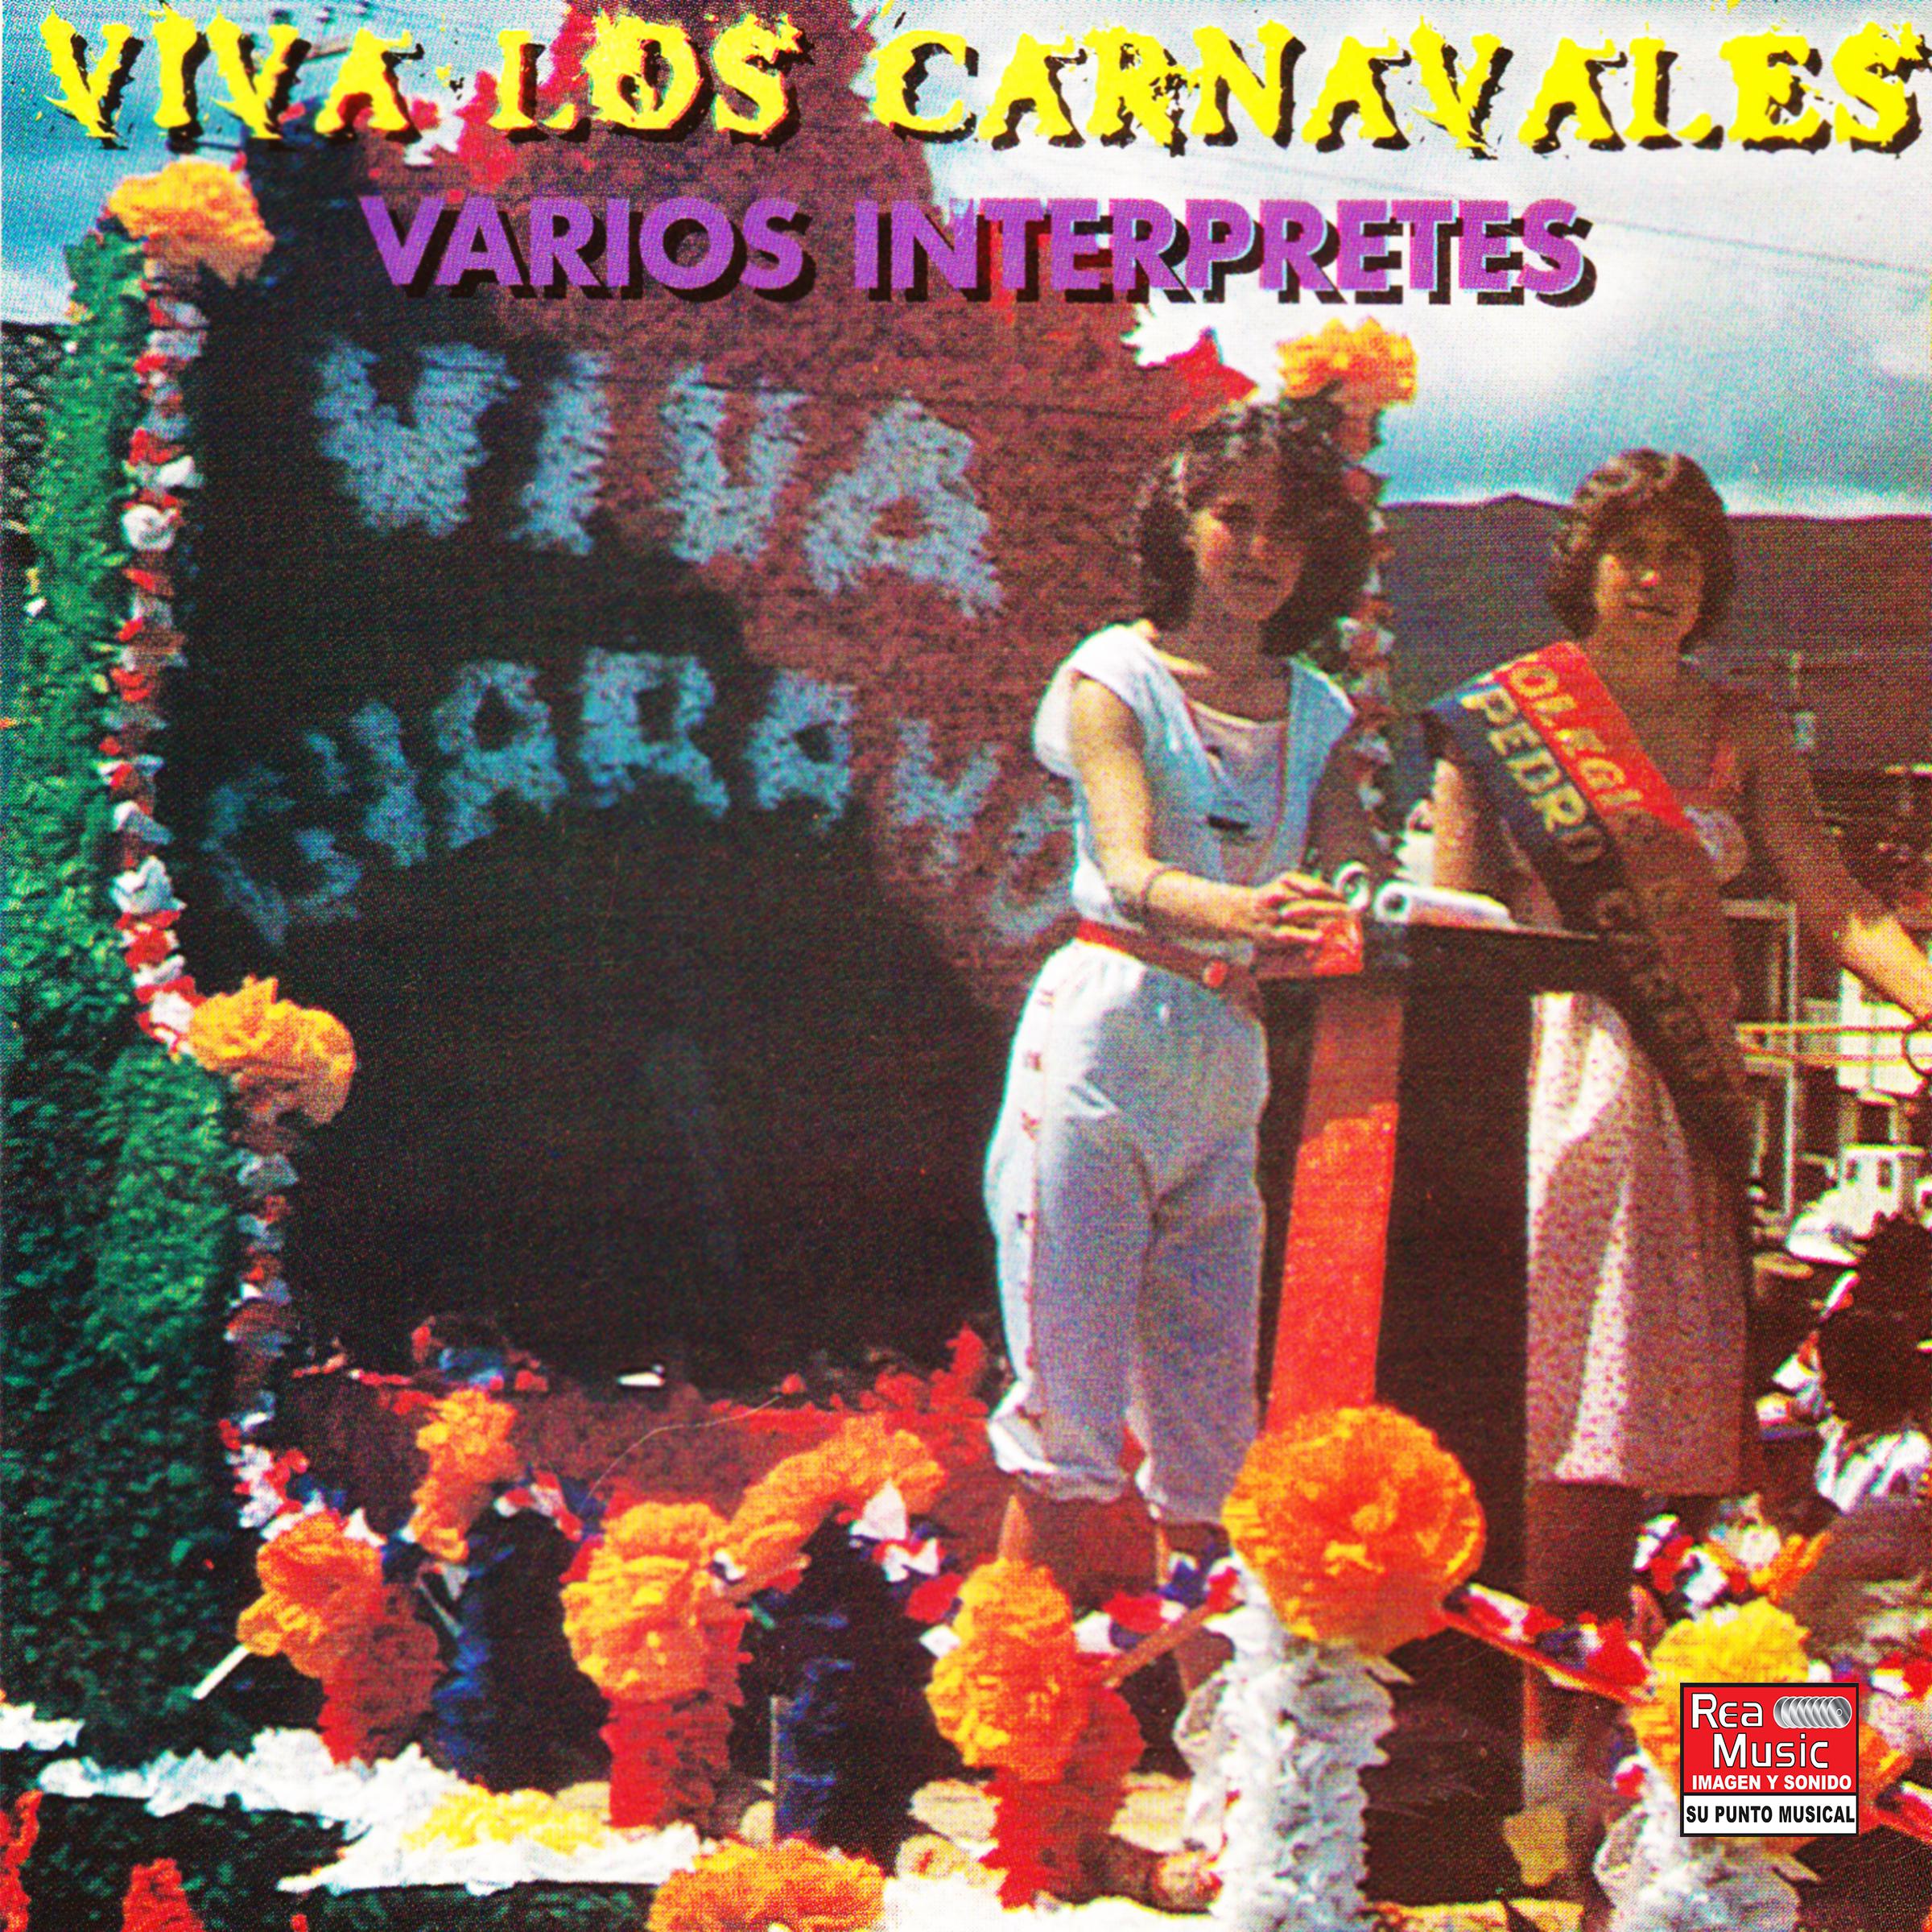 No Te Vayas Carnaval